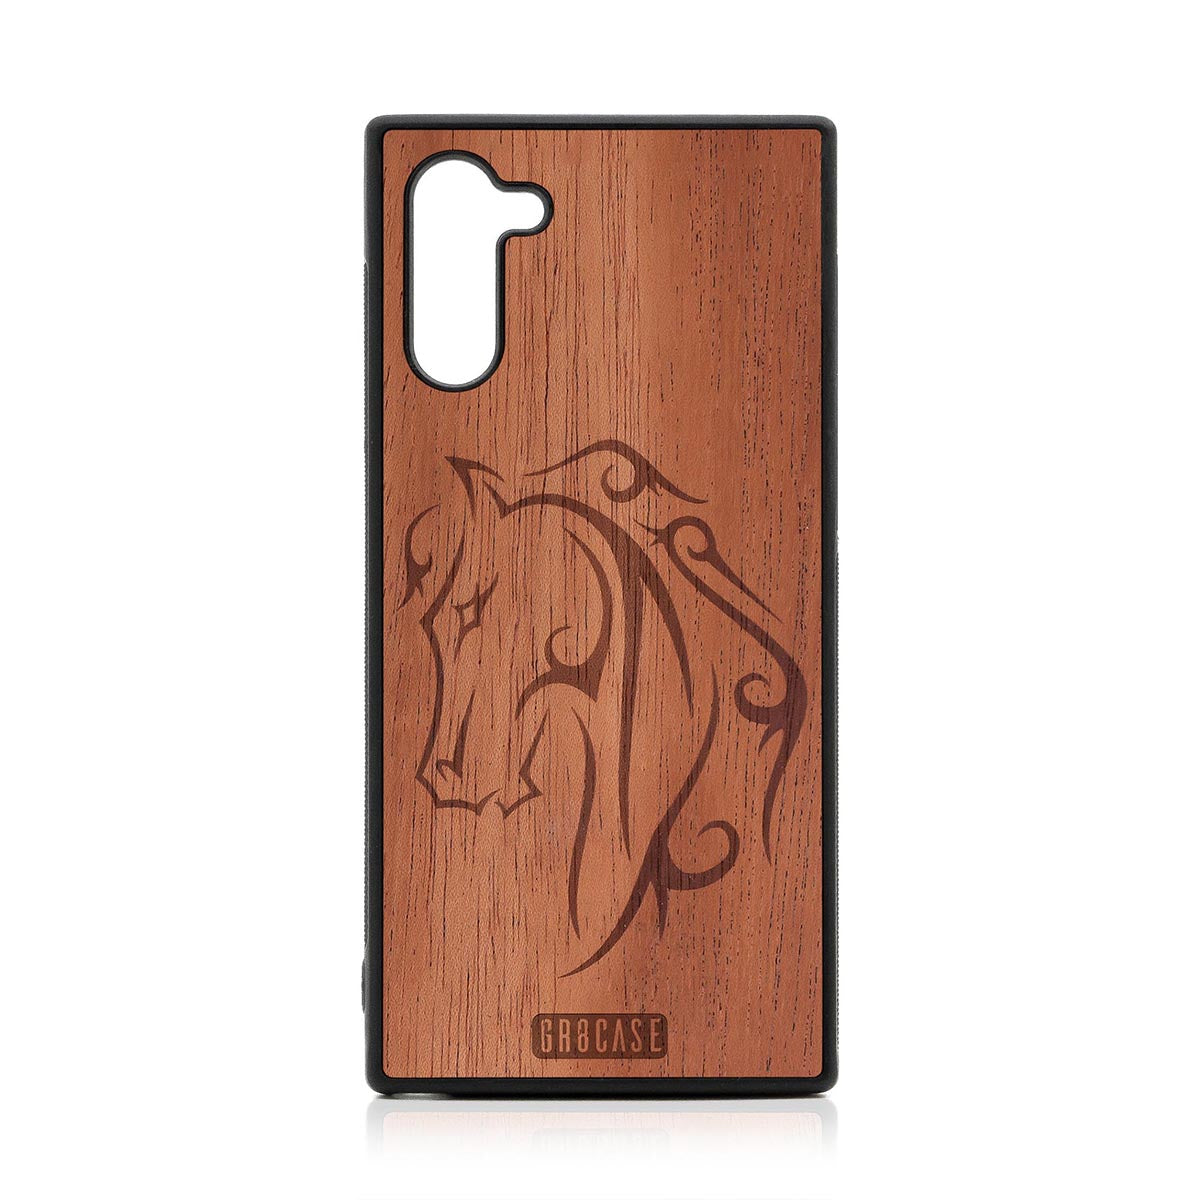 Horse Tattoo Design Wood Case Samsung Galaxy Note 10 by GR8CASE